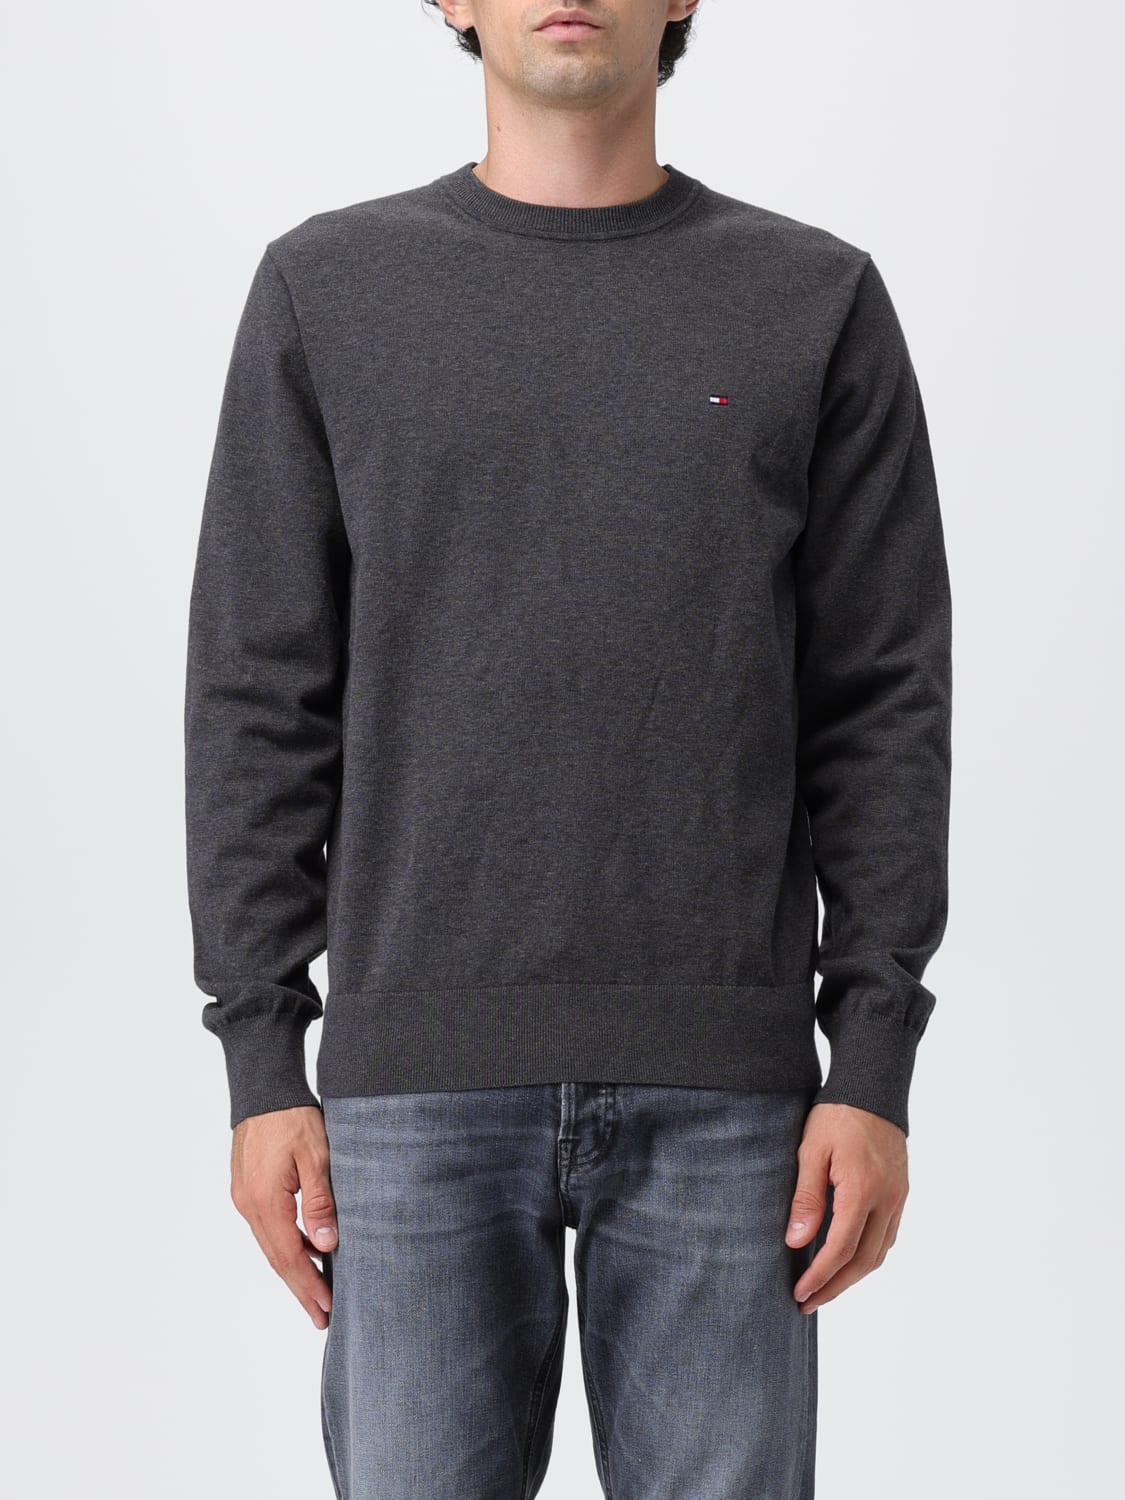 TOMMY HILFIGER: sweater - Grey | Hilfiger sweater MW0MW21316 online at GIGLIO.COM